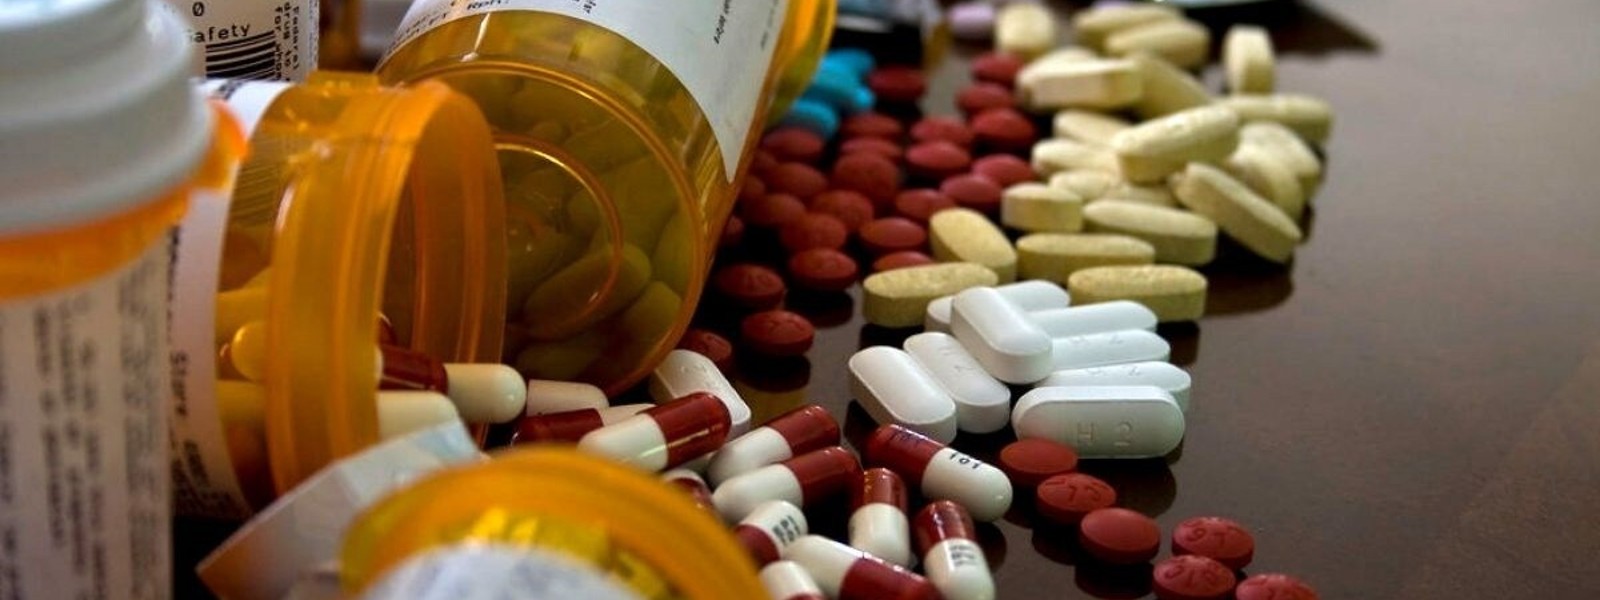 A medicine shortage does not exist: Bandula